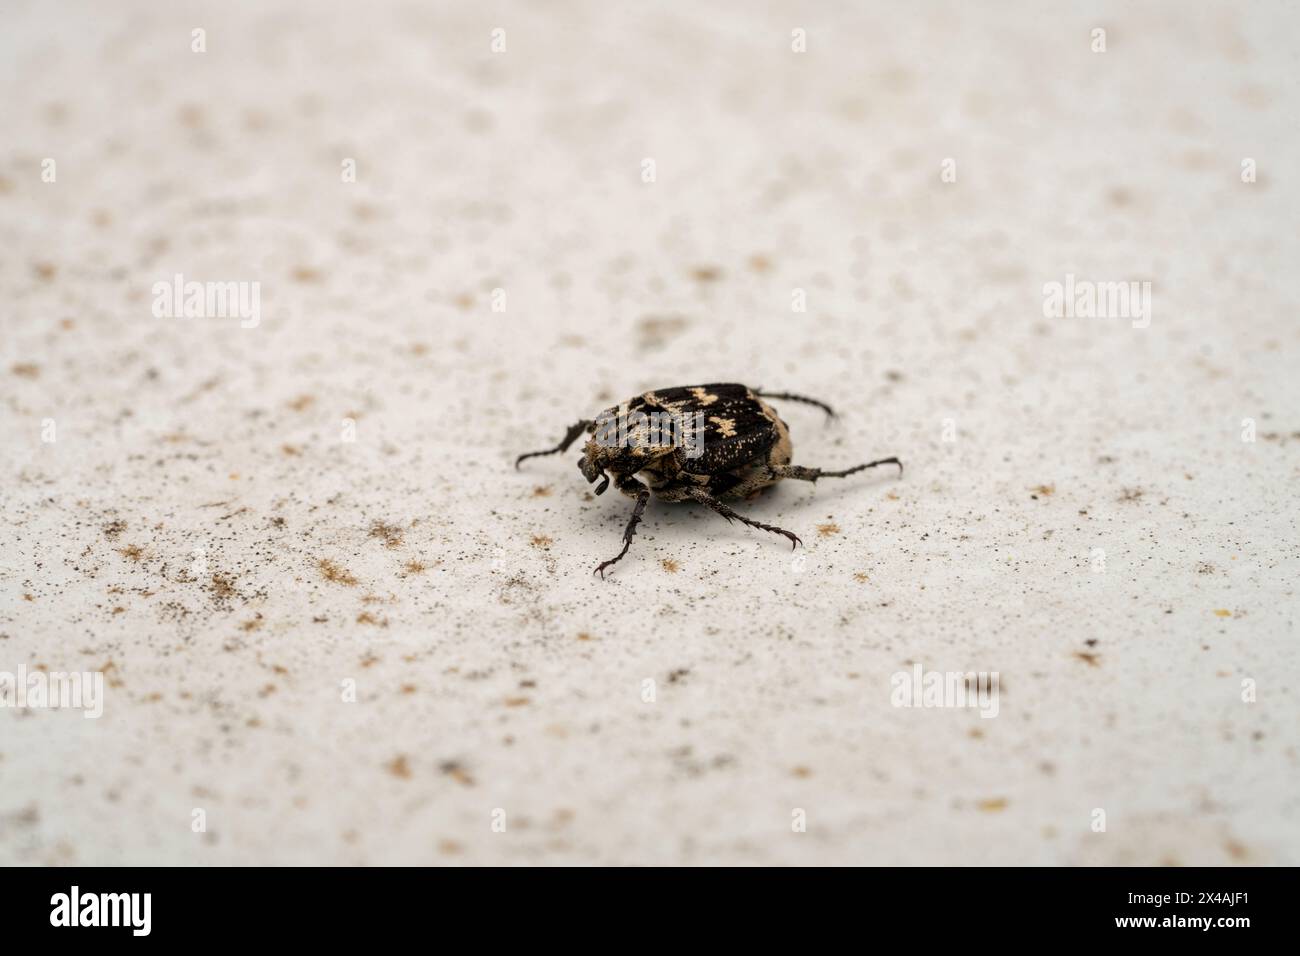 Valgus hemipterus Family Scarabaeidae Genus Valgus Scarab beetle wild nature bug photography, picture, wallpaper Stock Photo